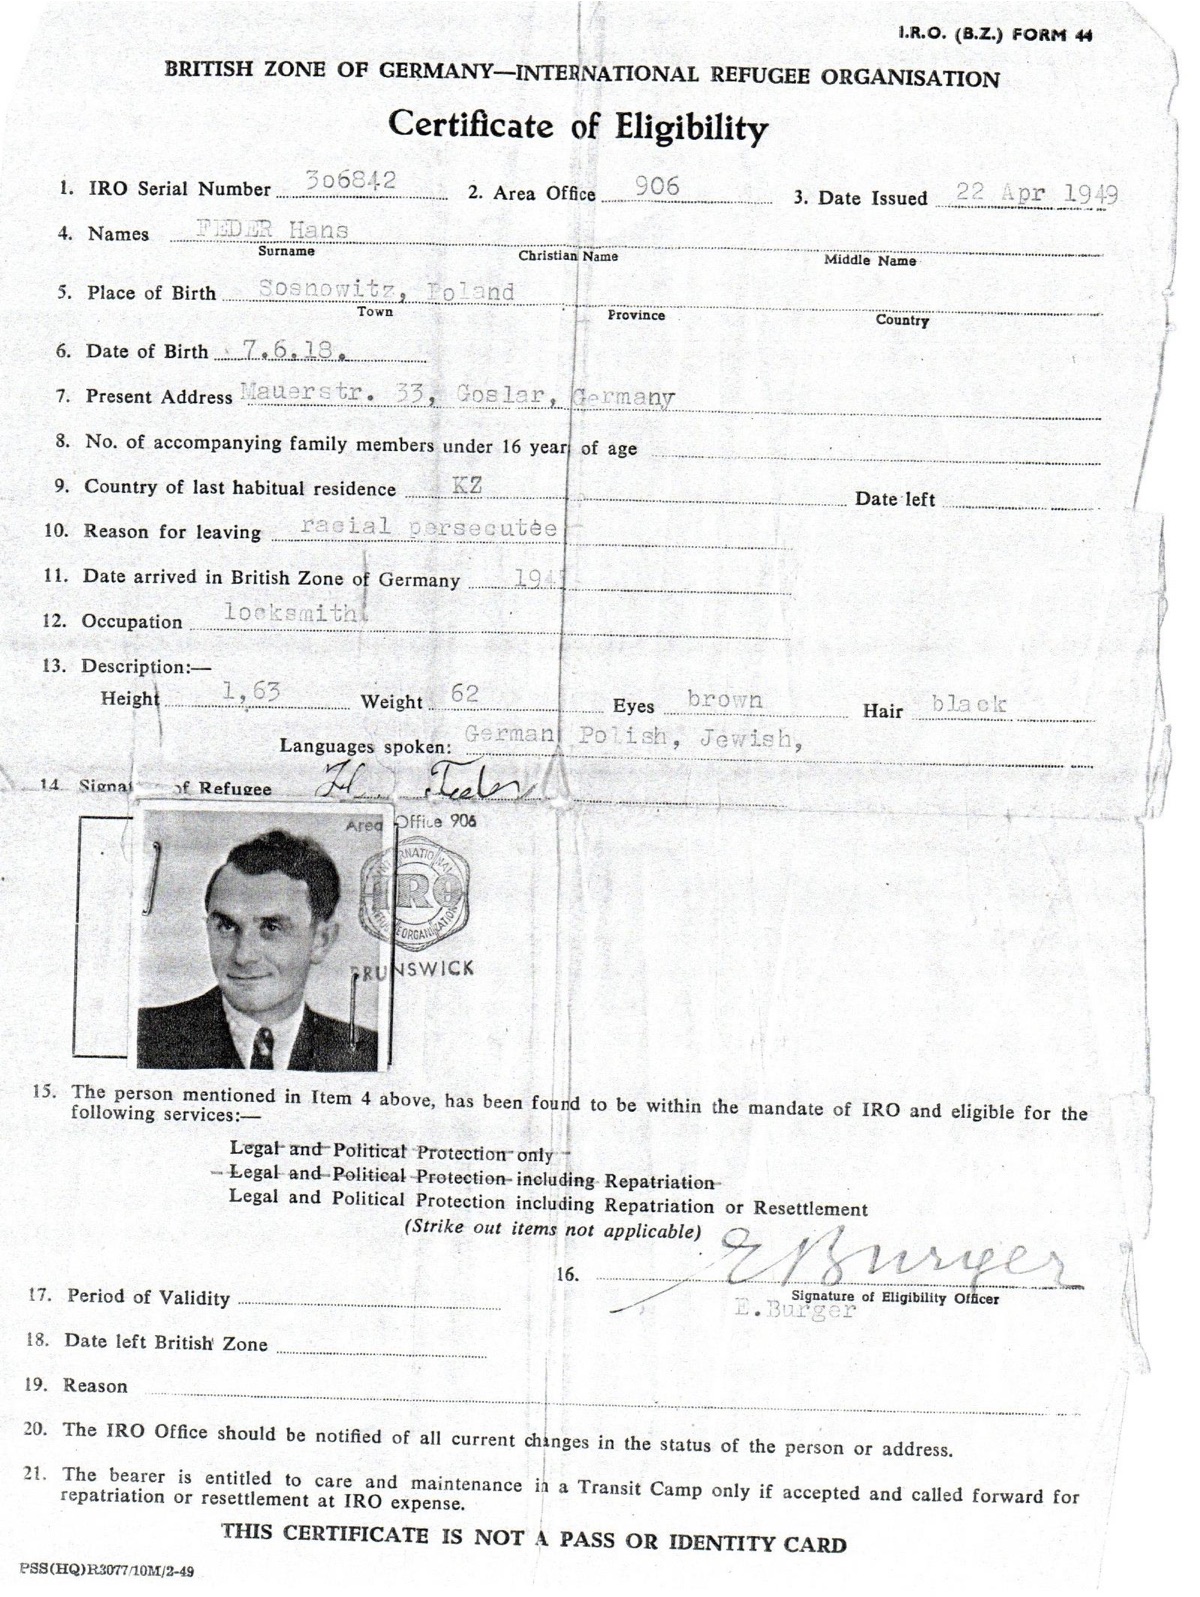 22-april-1949-intl-refugee-org-1.jpg